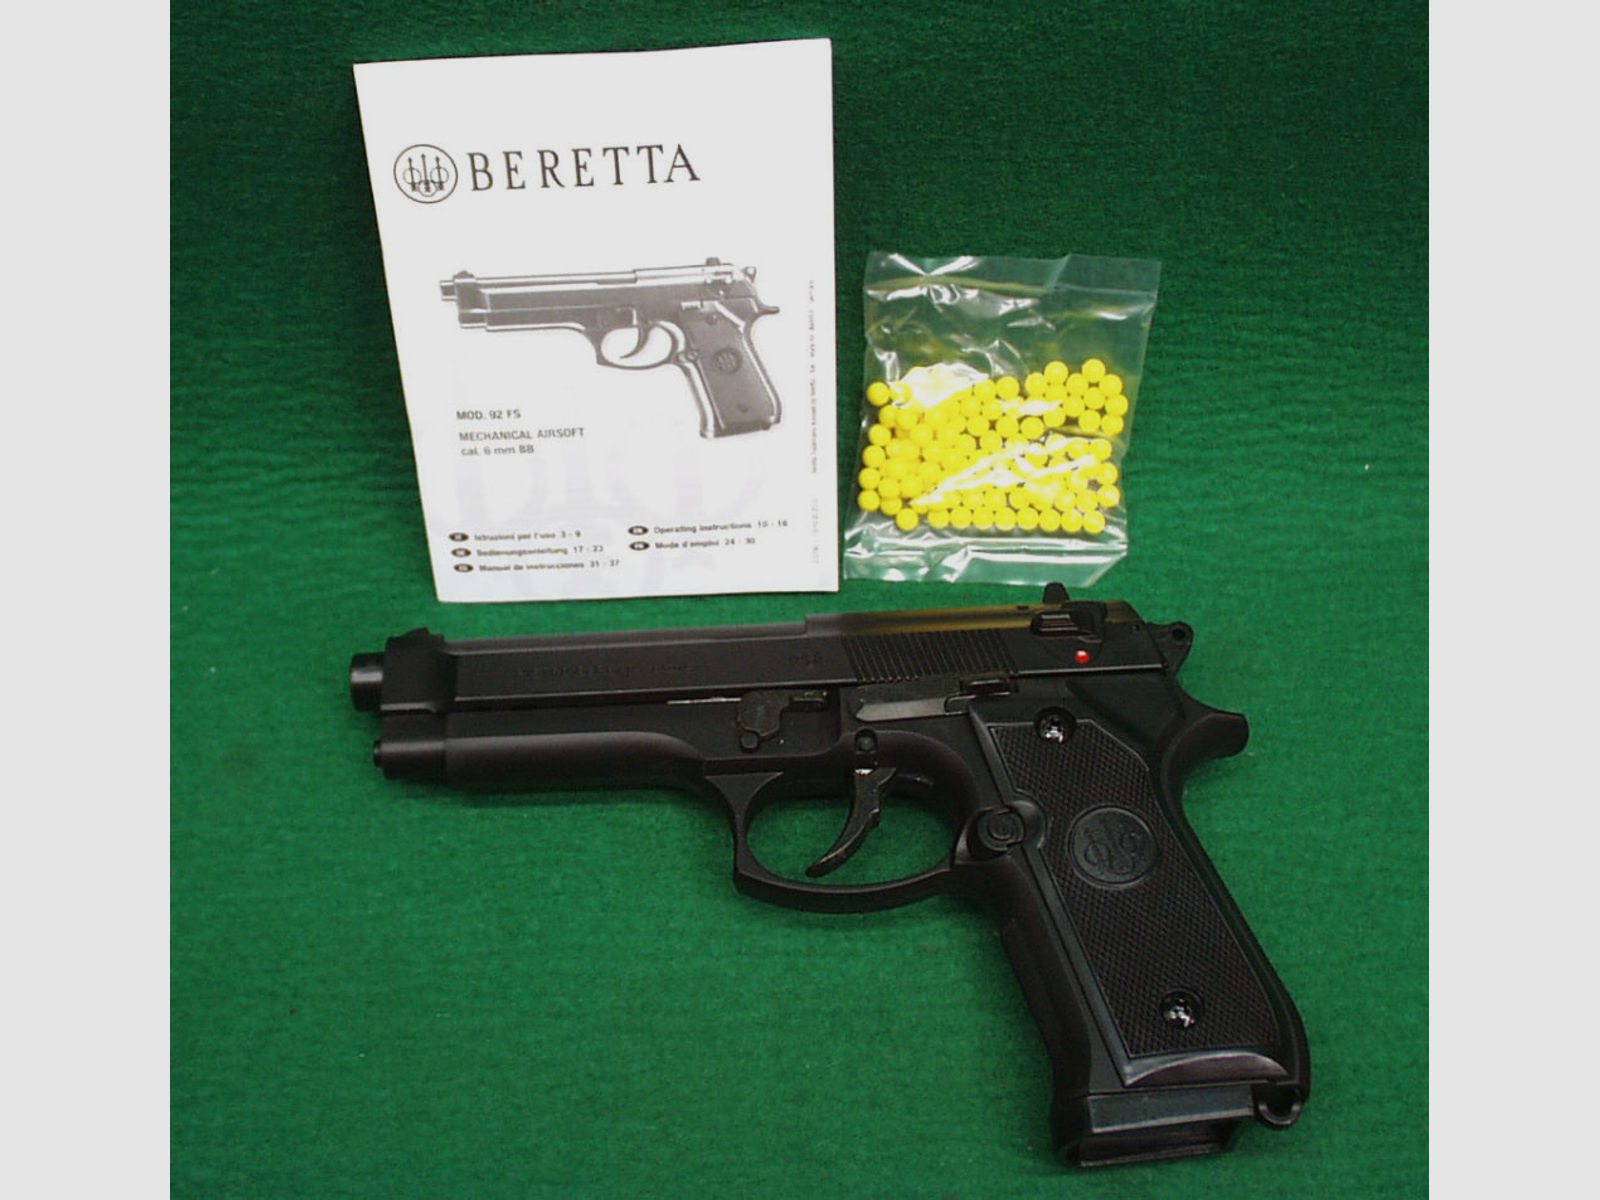 Umarex	 Beretta Mod.92 FS